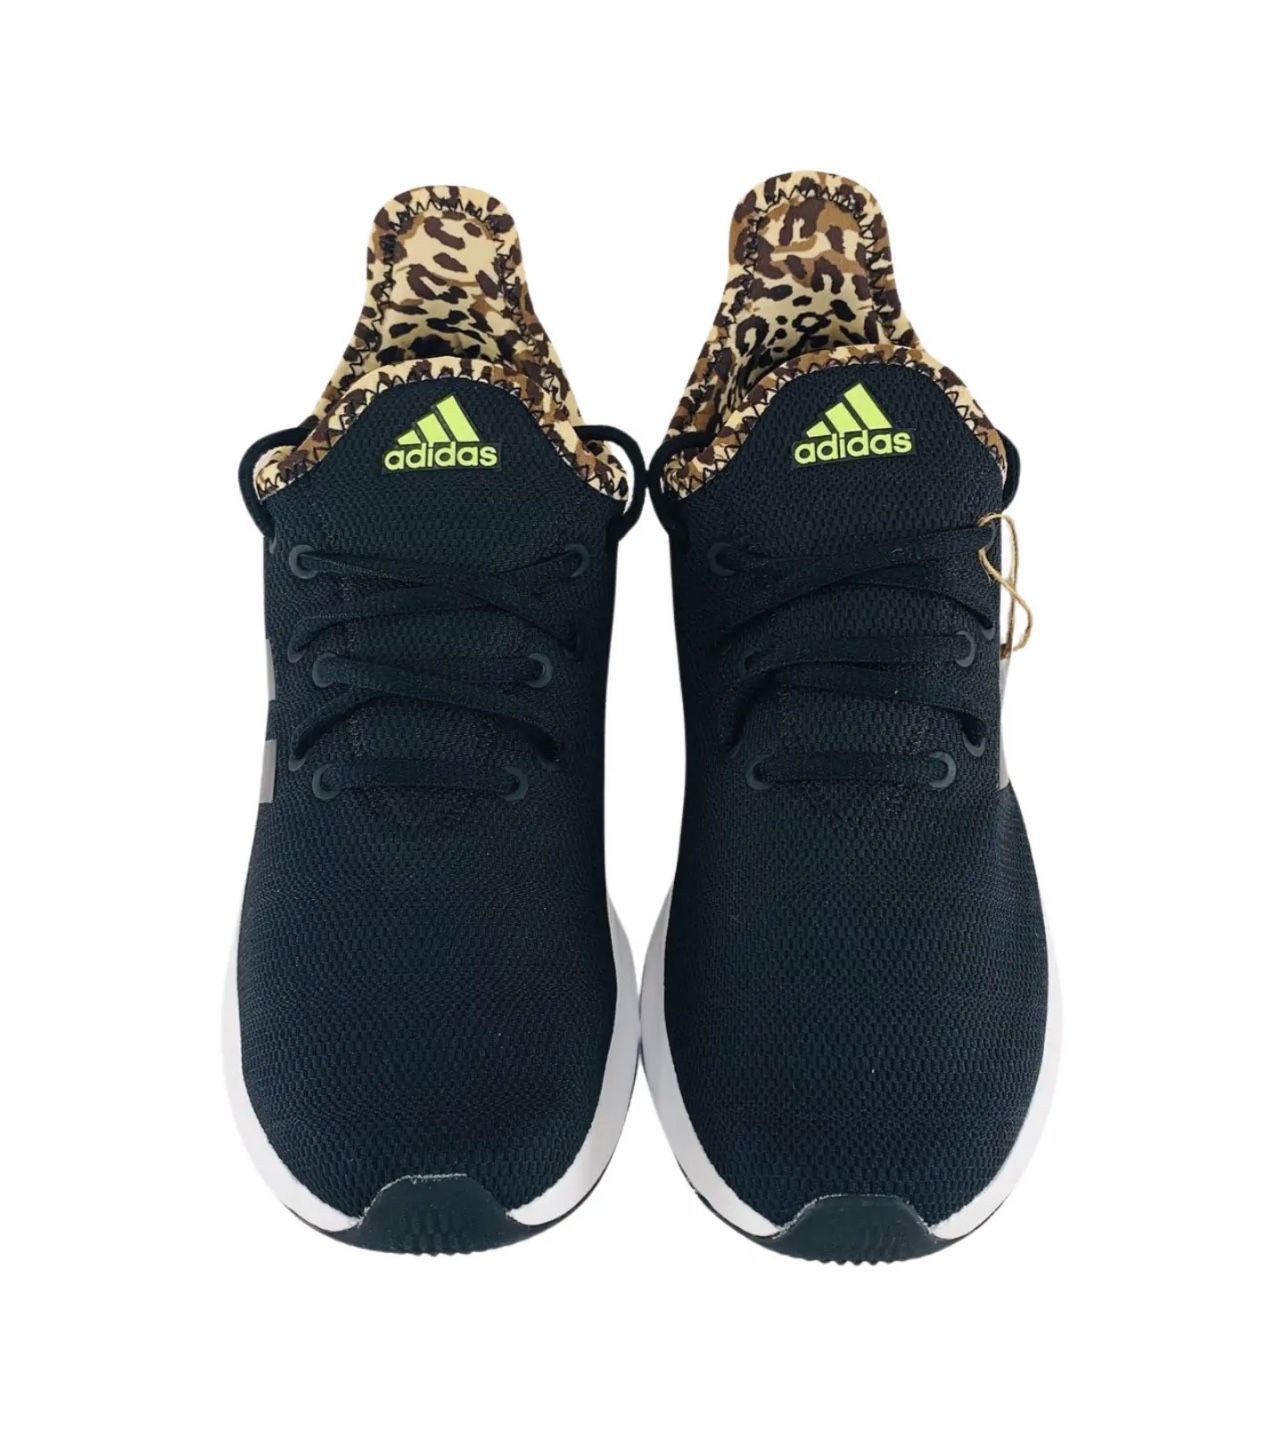 Adidas Cloudfoam Pure Black Leopard Sneakers Women's Sizes 10 New Shoes IG3150